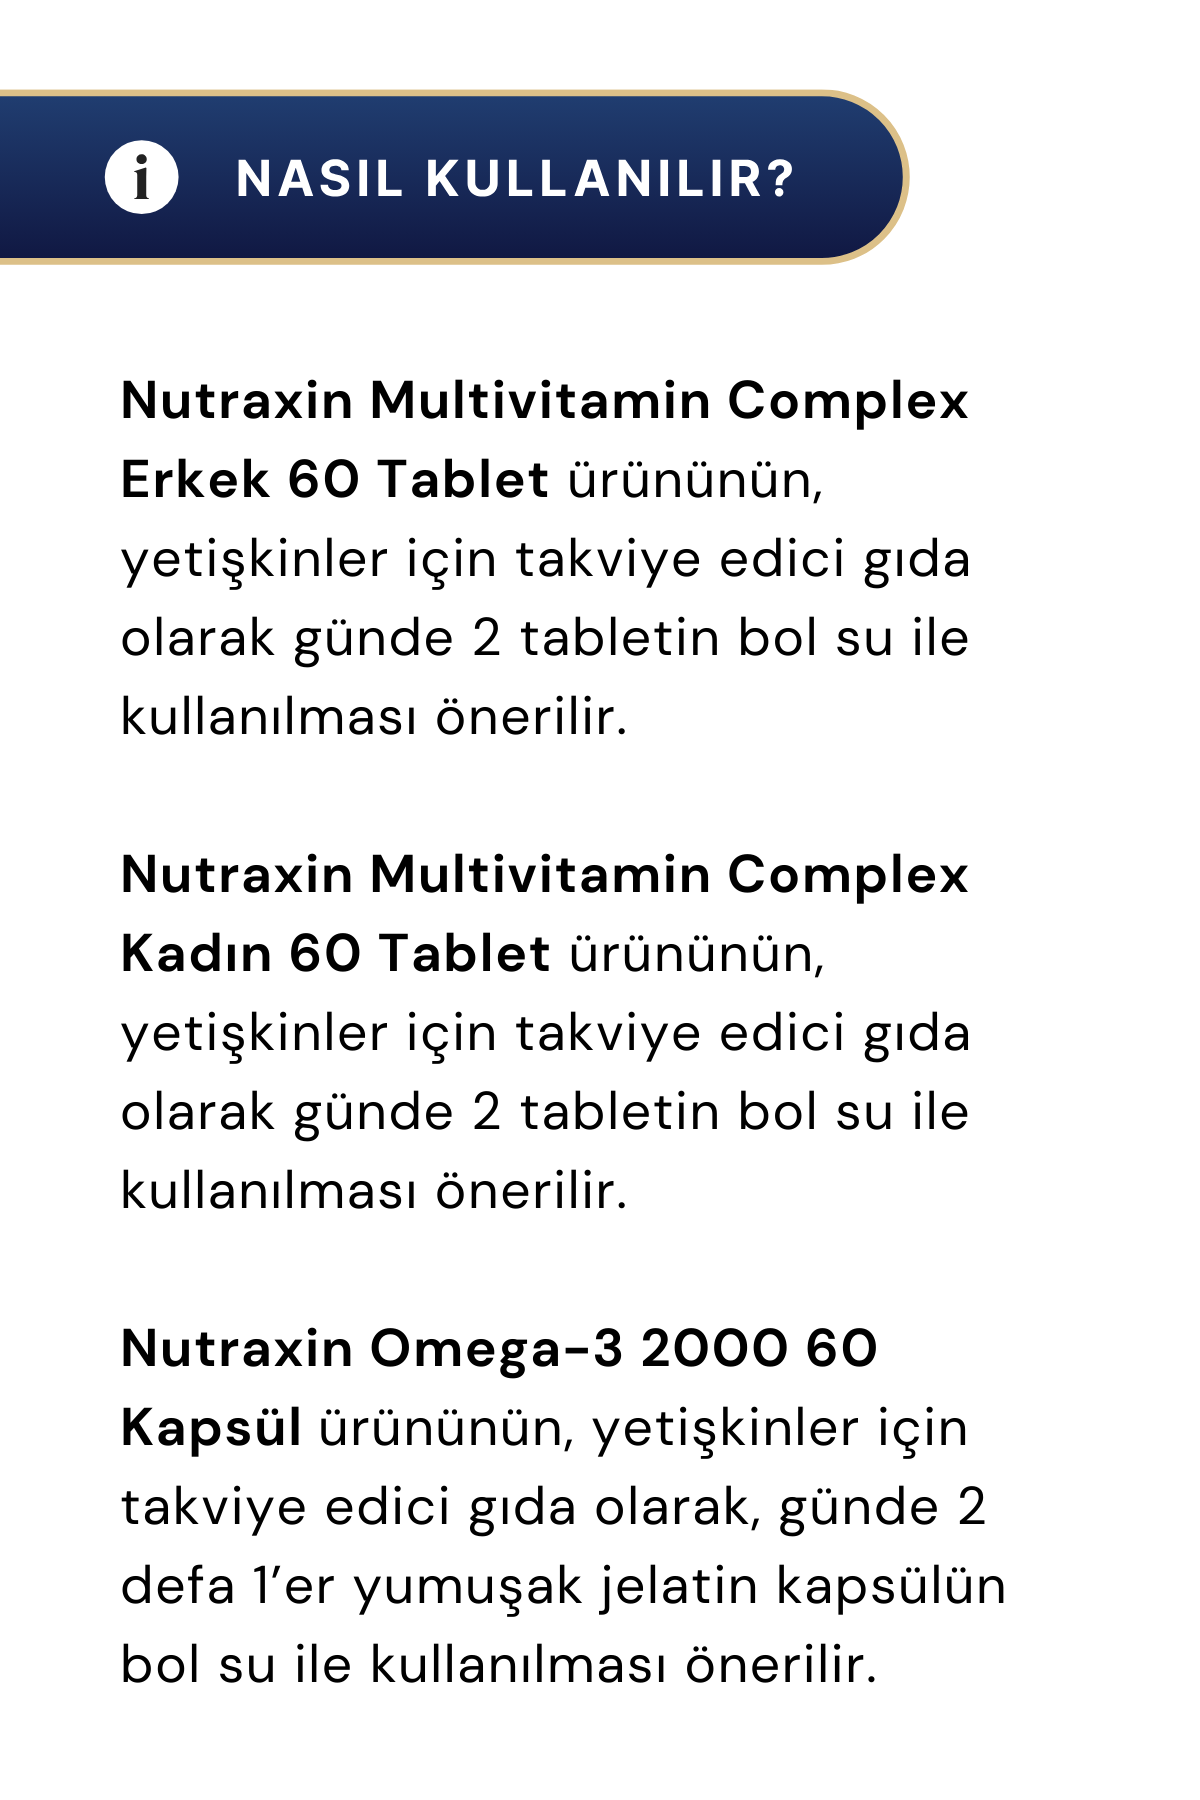 Nutraxin Men's Multivitamin Complex & Women's Multivitamin Complex & Omega-3 2000 mg